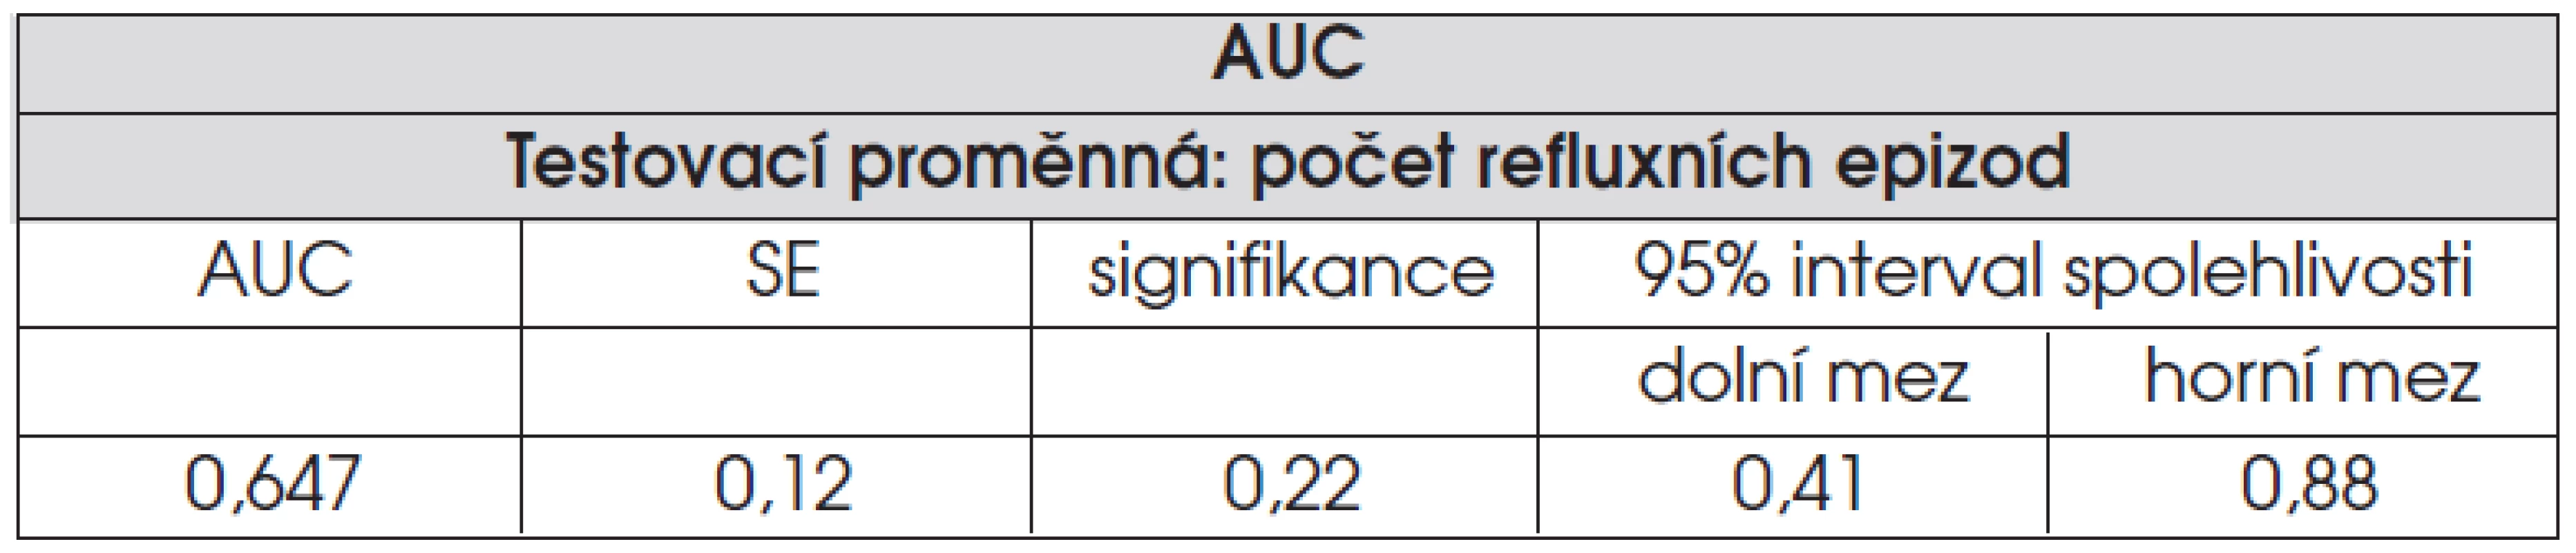 Odhad AUC.
Boix-Ochoa index